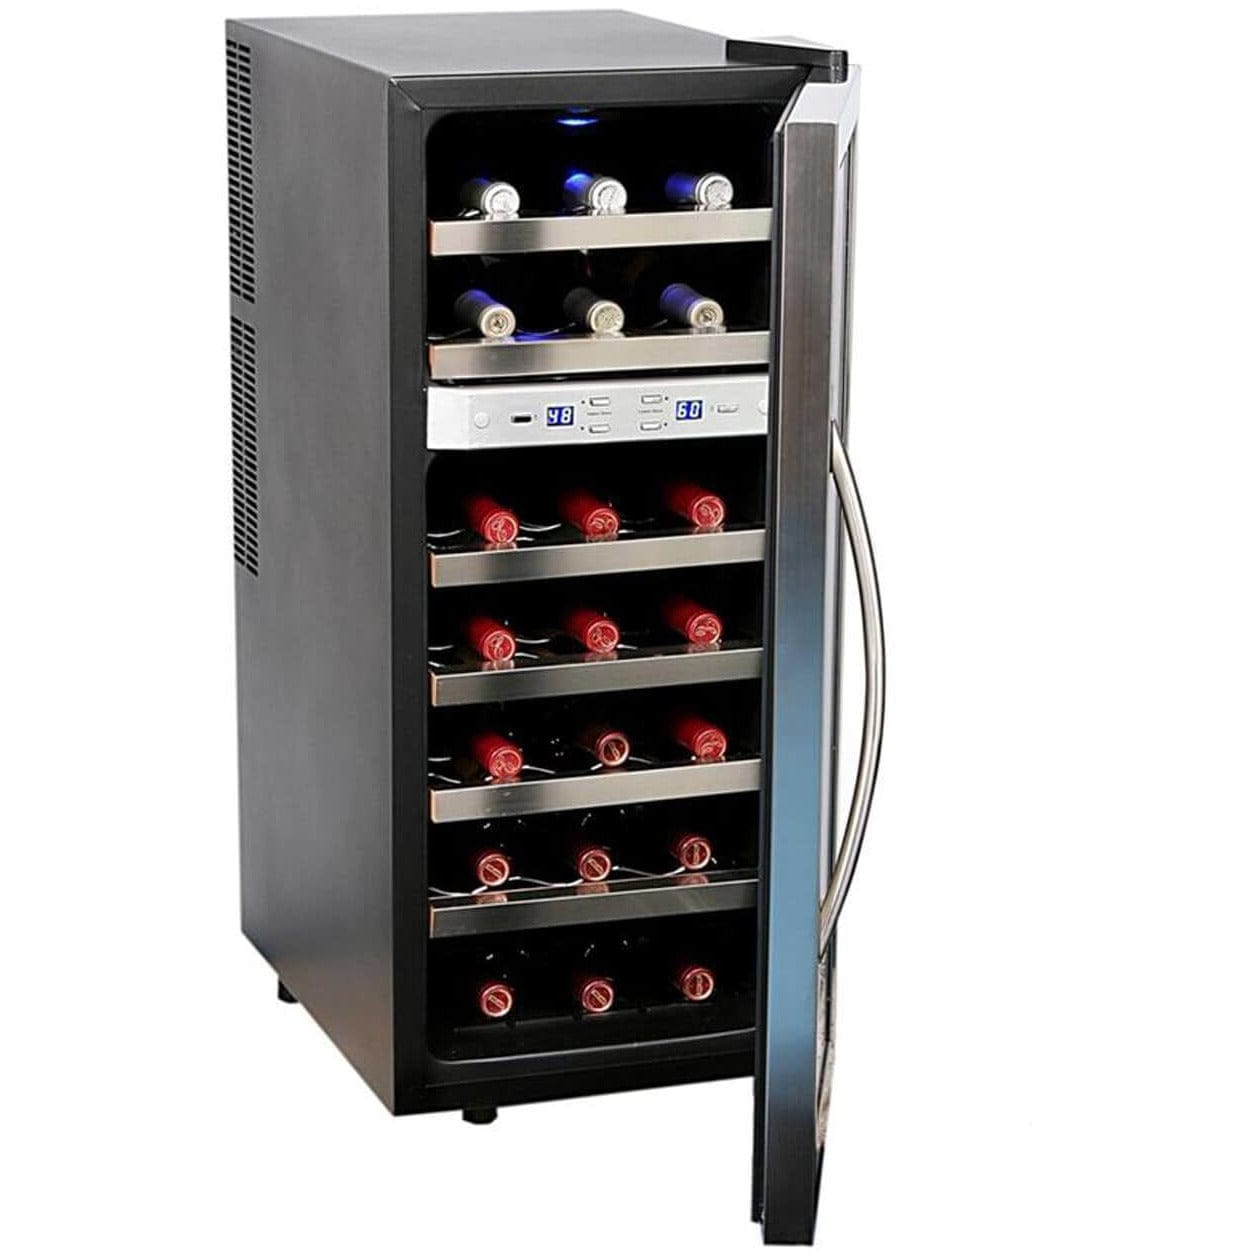 Whynter 21 Bottle Dual Temperature Zone Wine Cooler WC-211DZ Wine Coolers WC-211DZ Luxury Appliances Direct